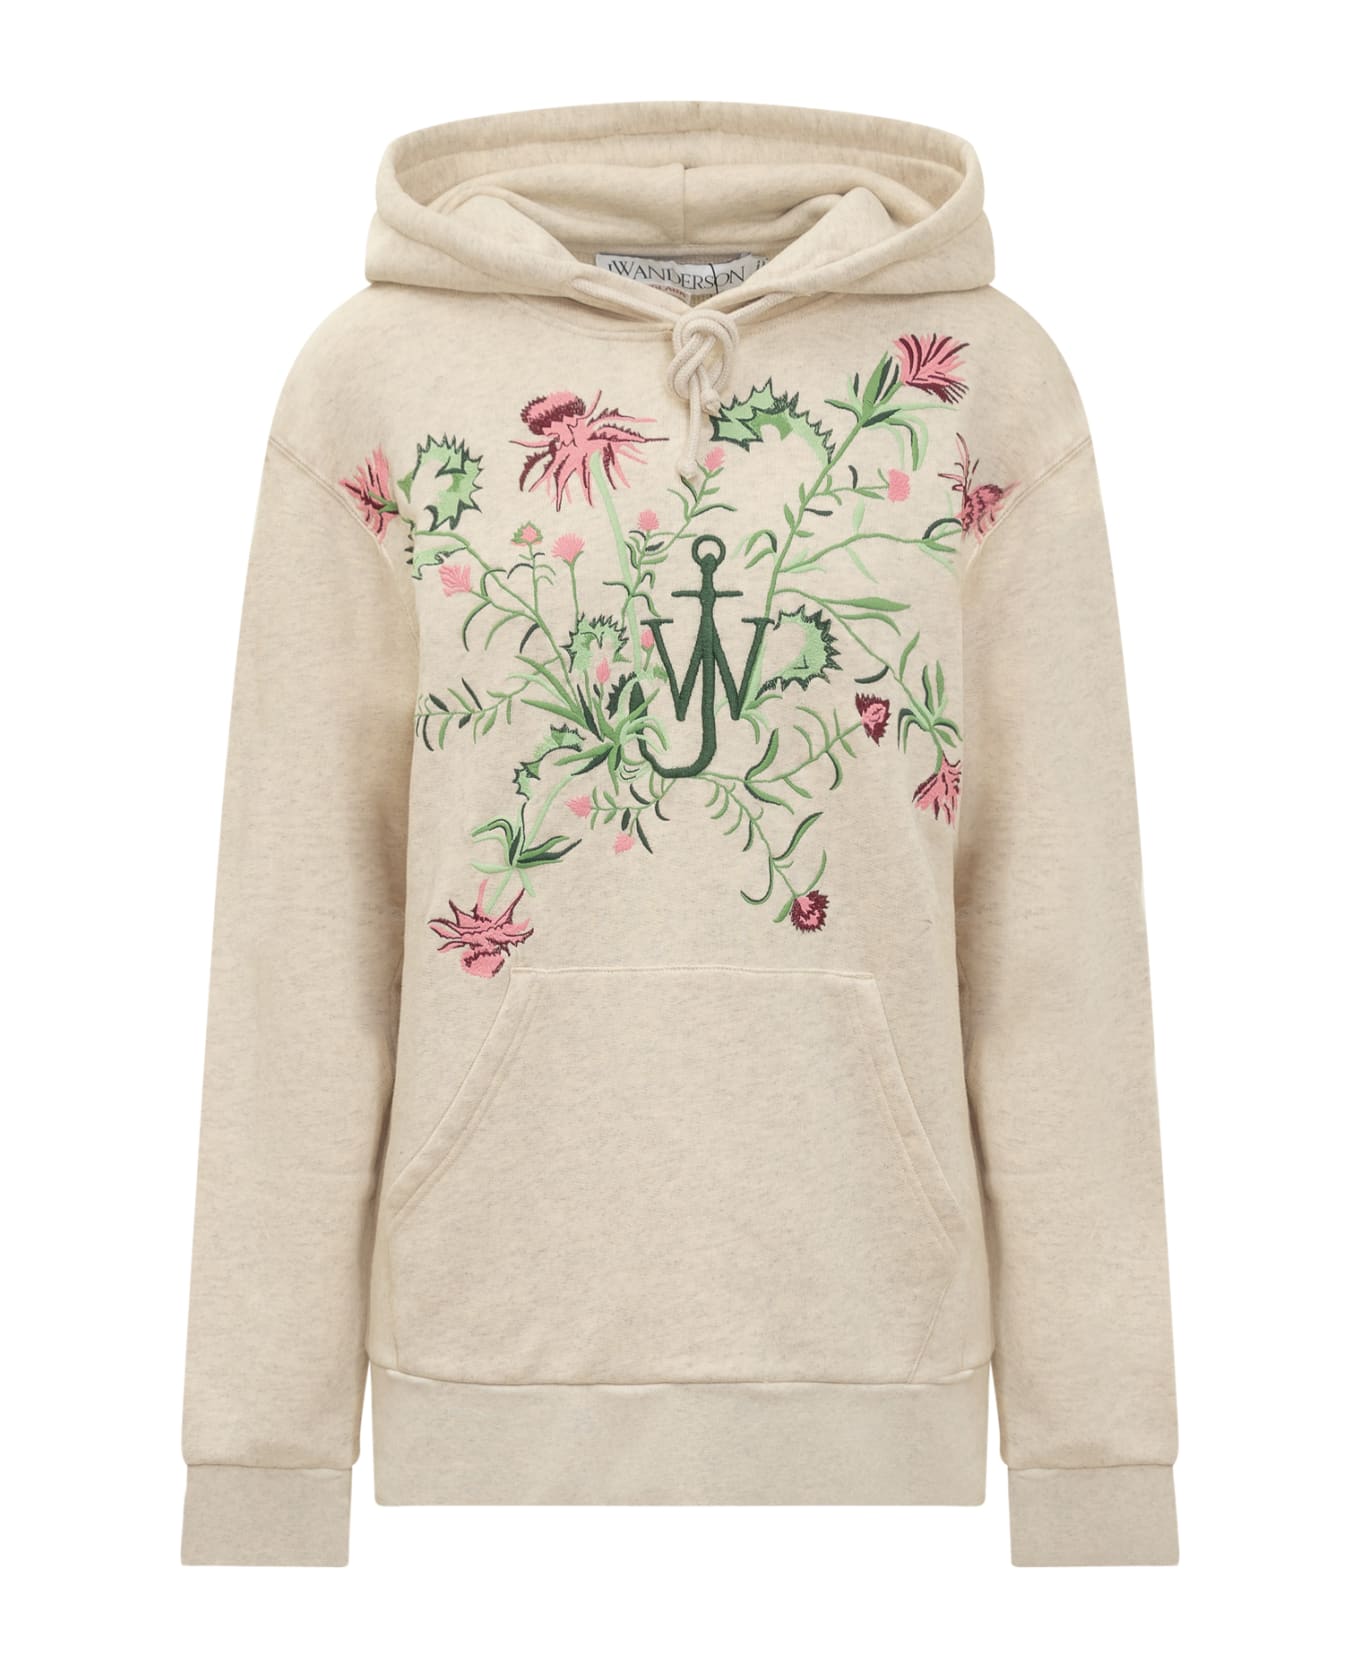 J.W. Anderson Sweatshirt With Embroidery - OATMEAL MELANGE